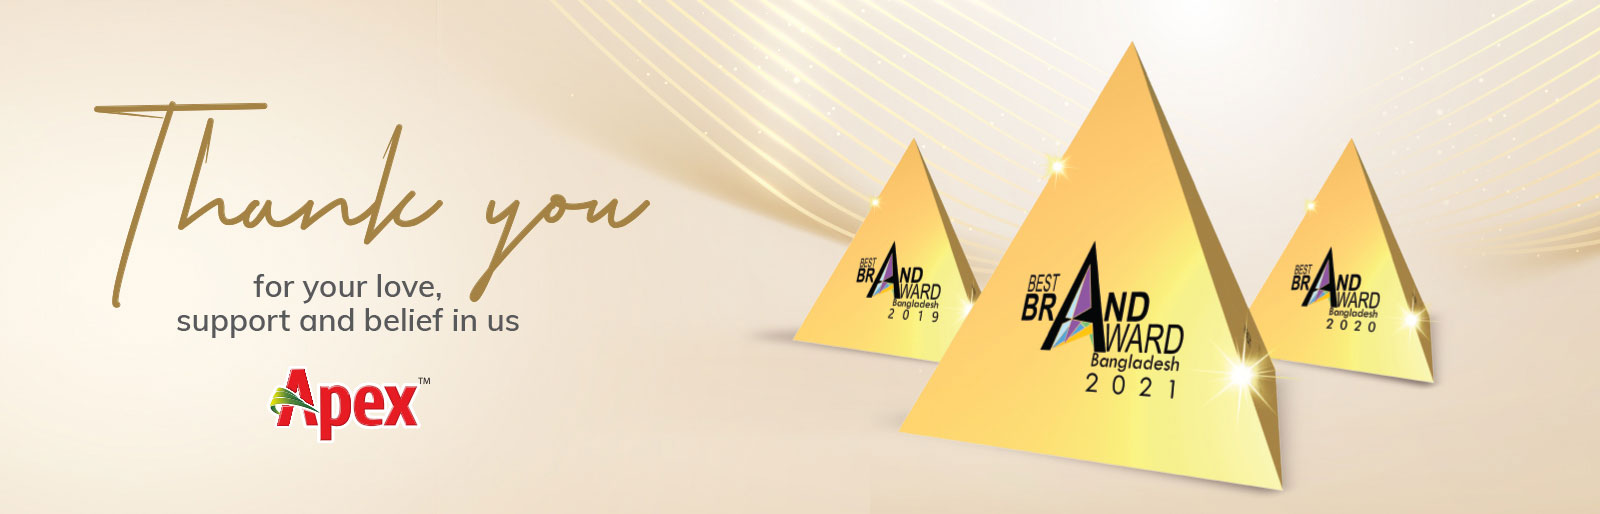 Apex Wins Best Brand Award